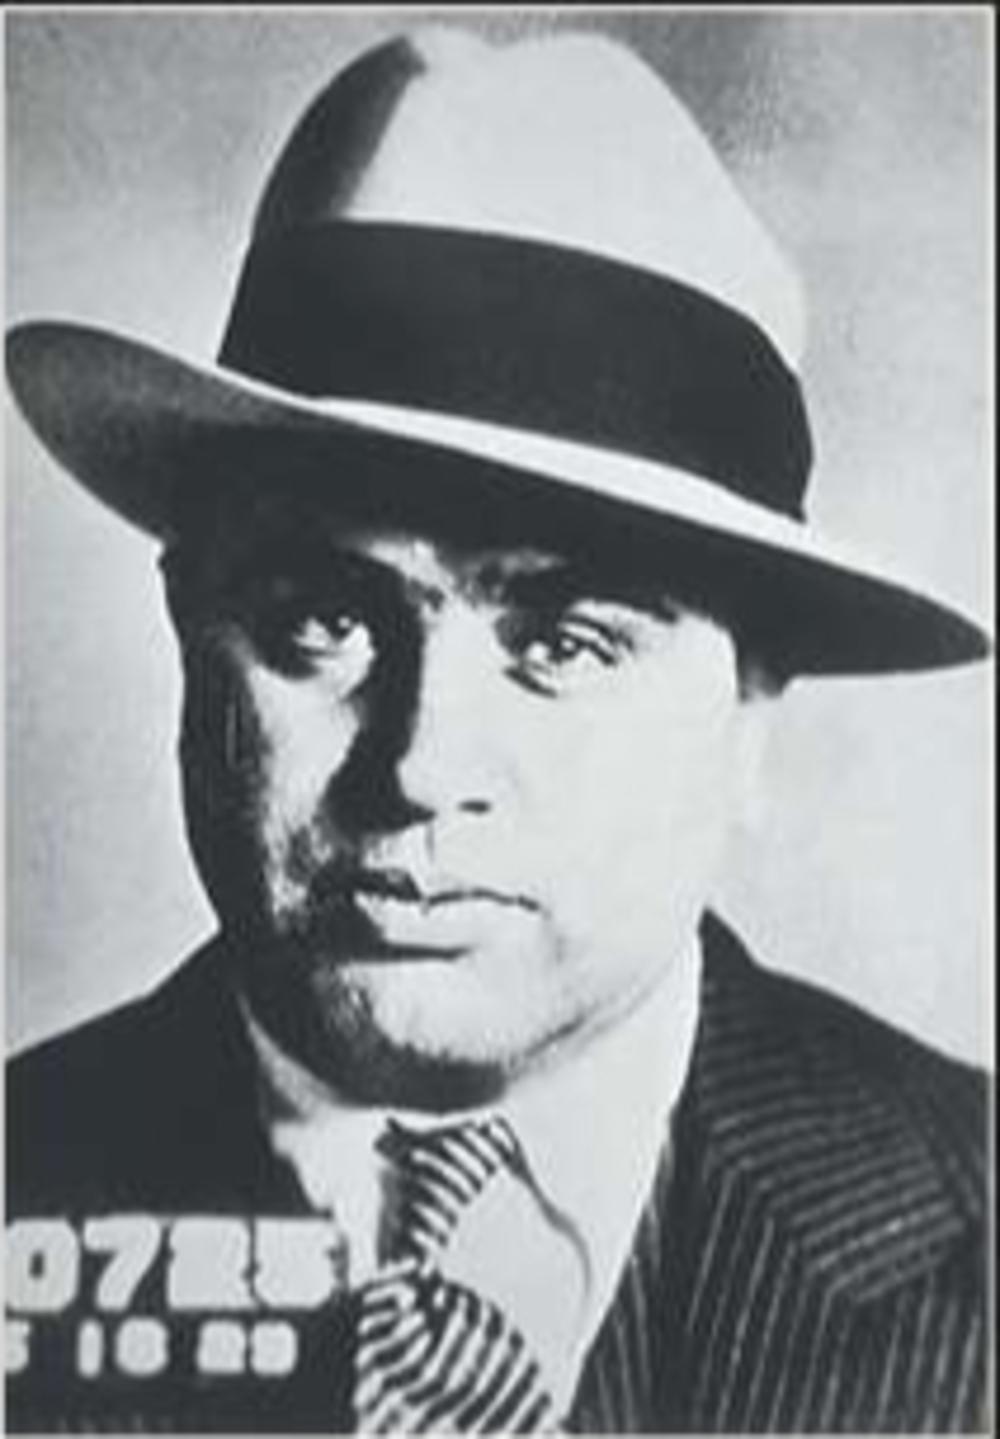 Al 'Scarface' Capone, gangsterbaas in Chicago.